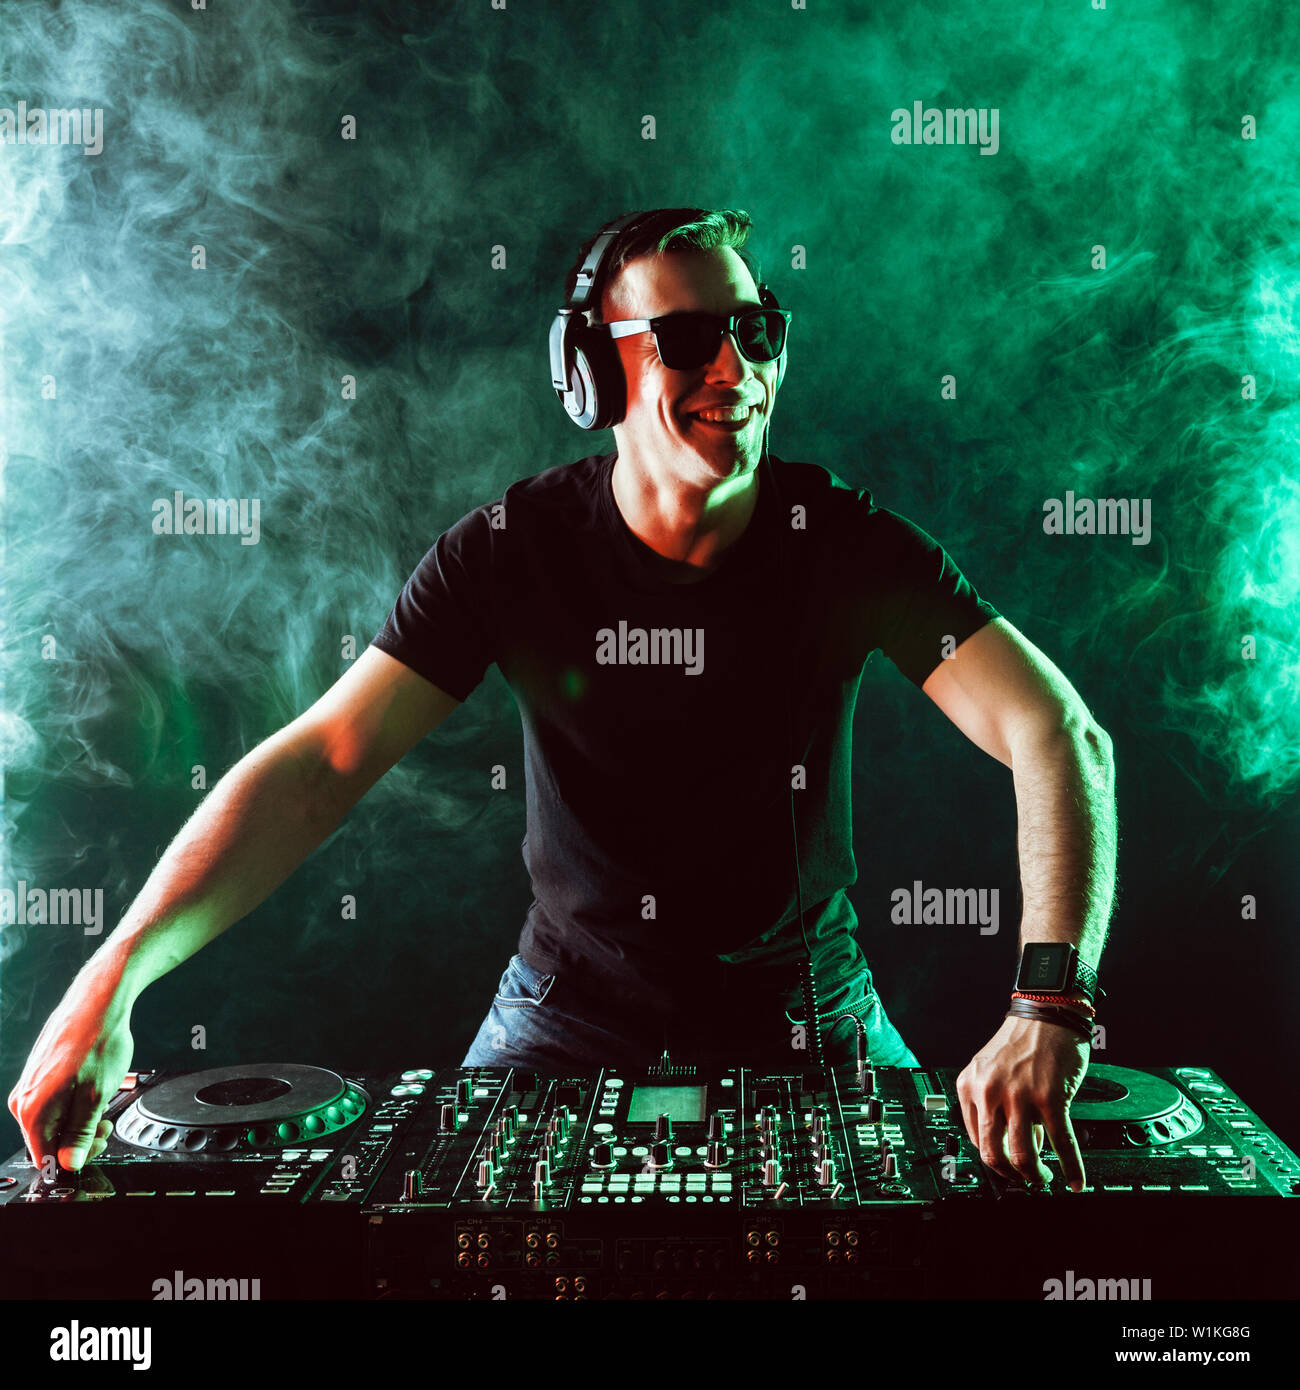 DJ mixing music on mixer on dark background Stock Photo - Alamy